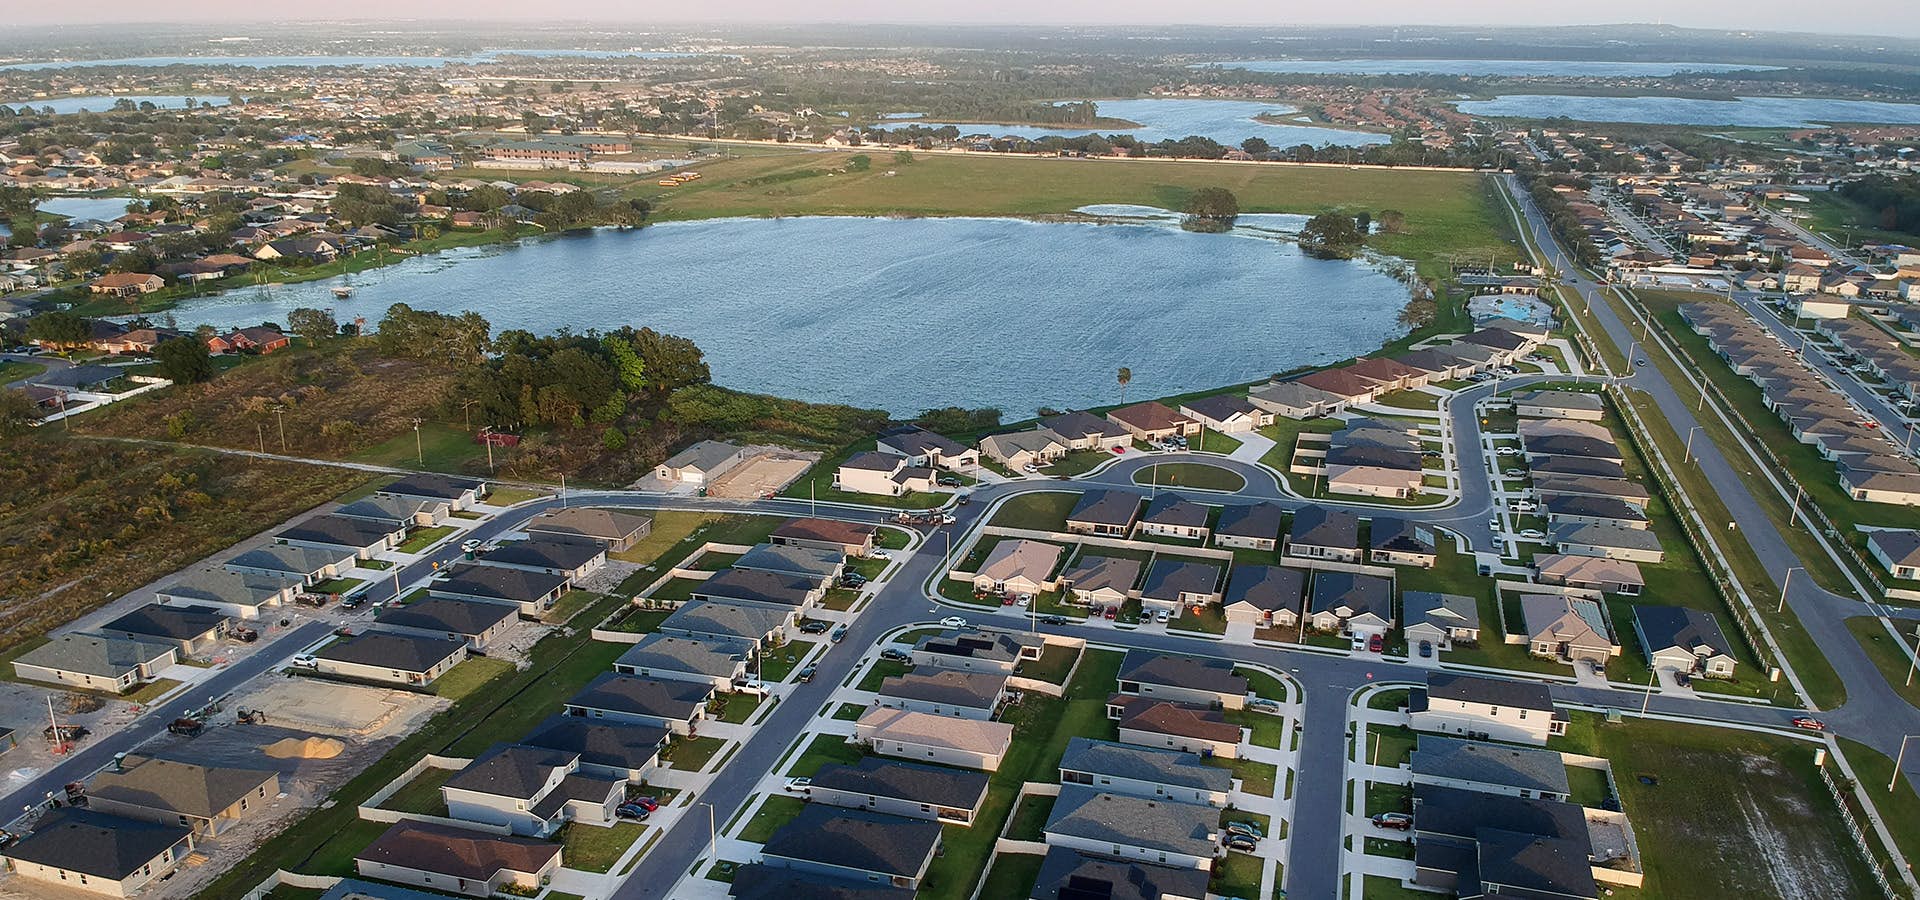 Aerial view of VillaMar new home community